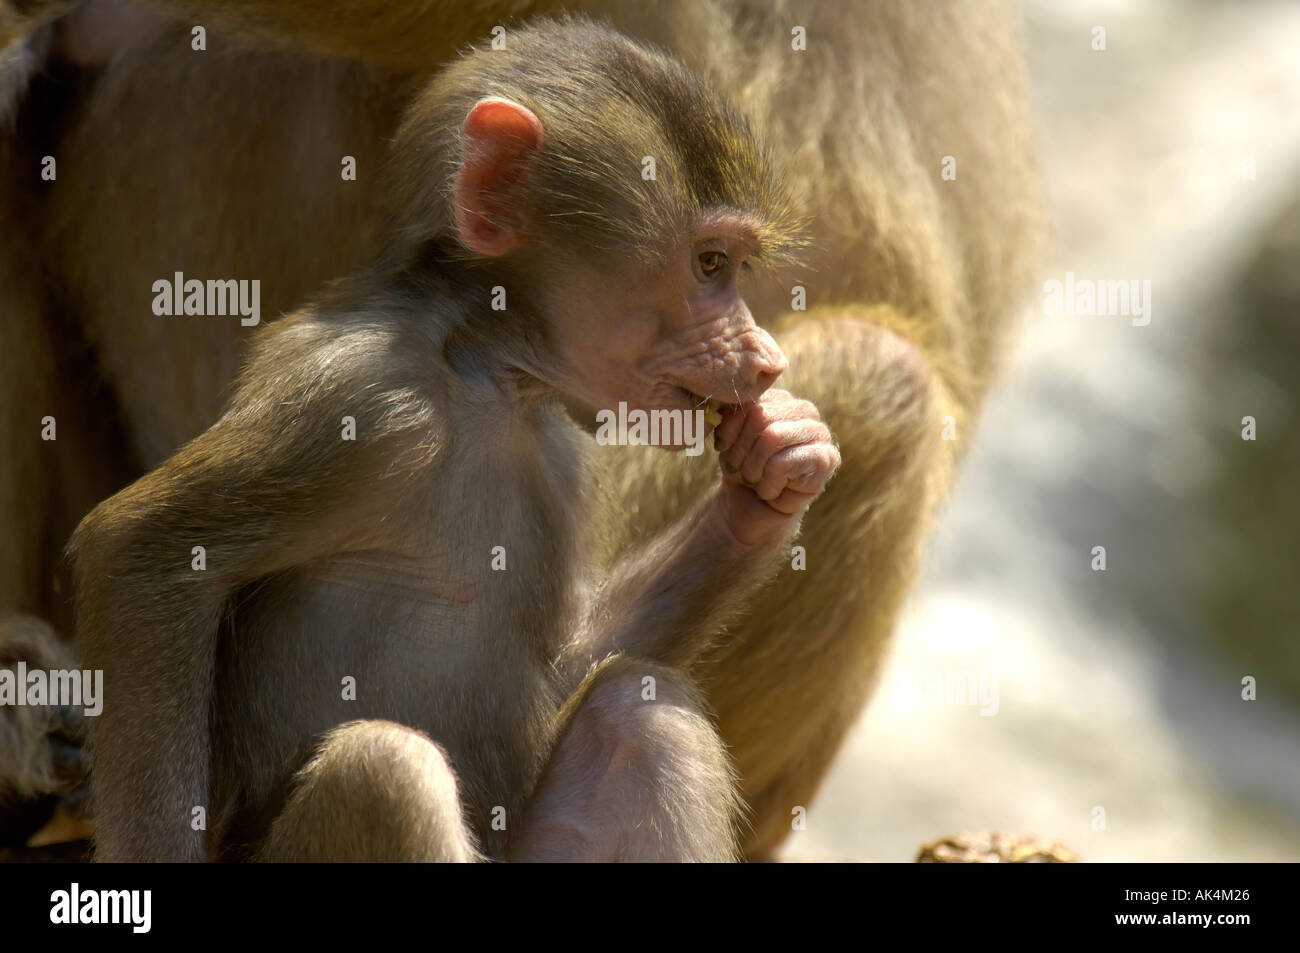 Pavianjunges sitzt vor seiner Mutter und frisst eating baby baboon sitting in front of its mother Stock Photo